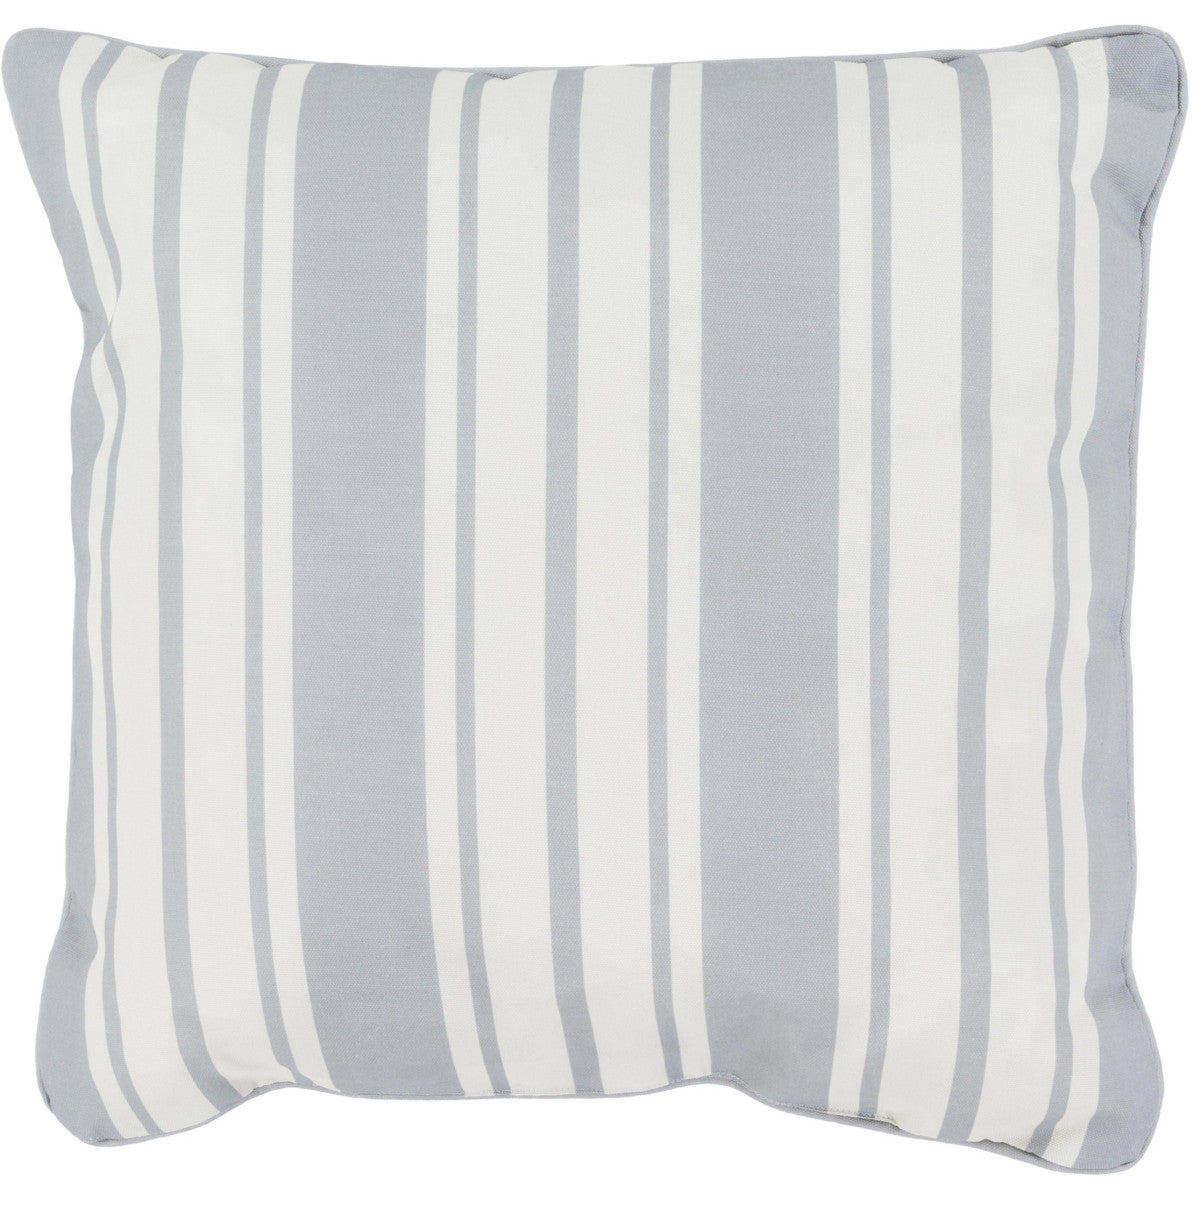 Surya Nautical Stripe NS005 Pillow